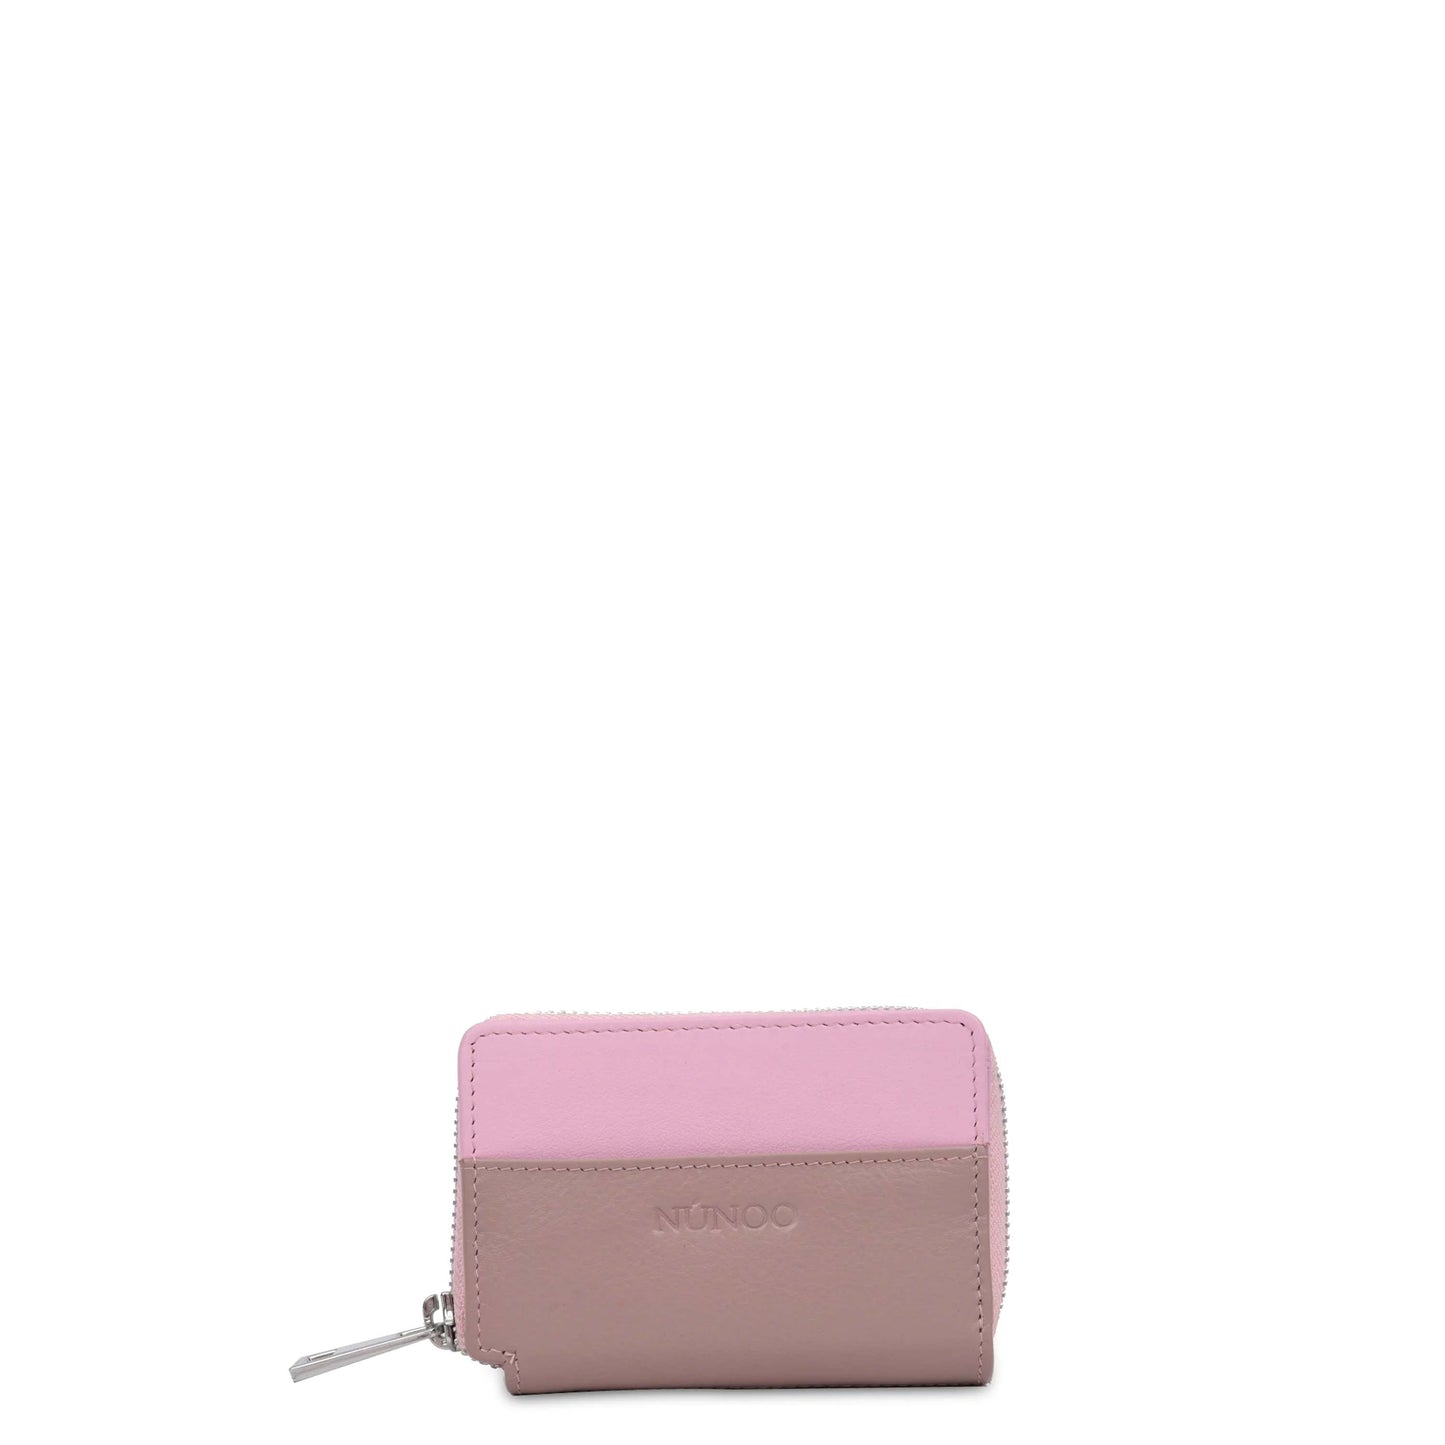 Núnoo 106 silky camel/pink Wallet